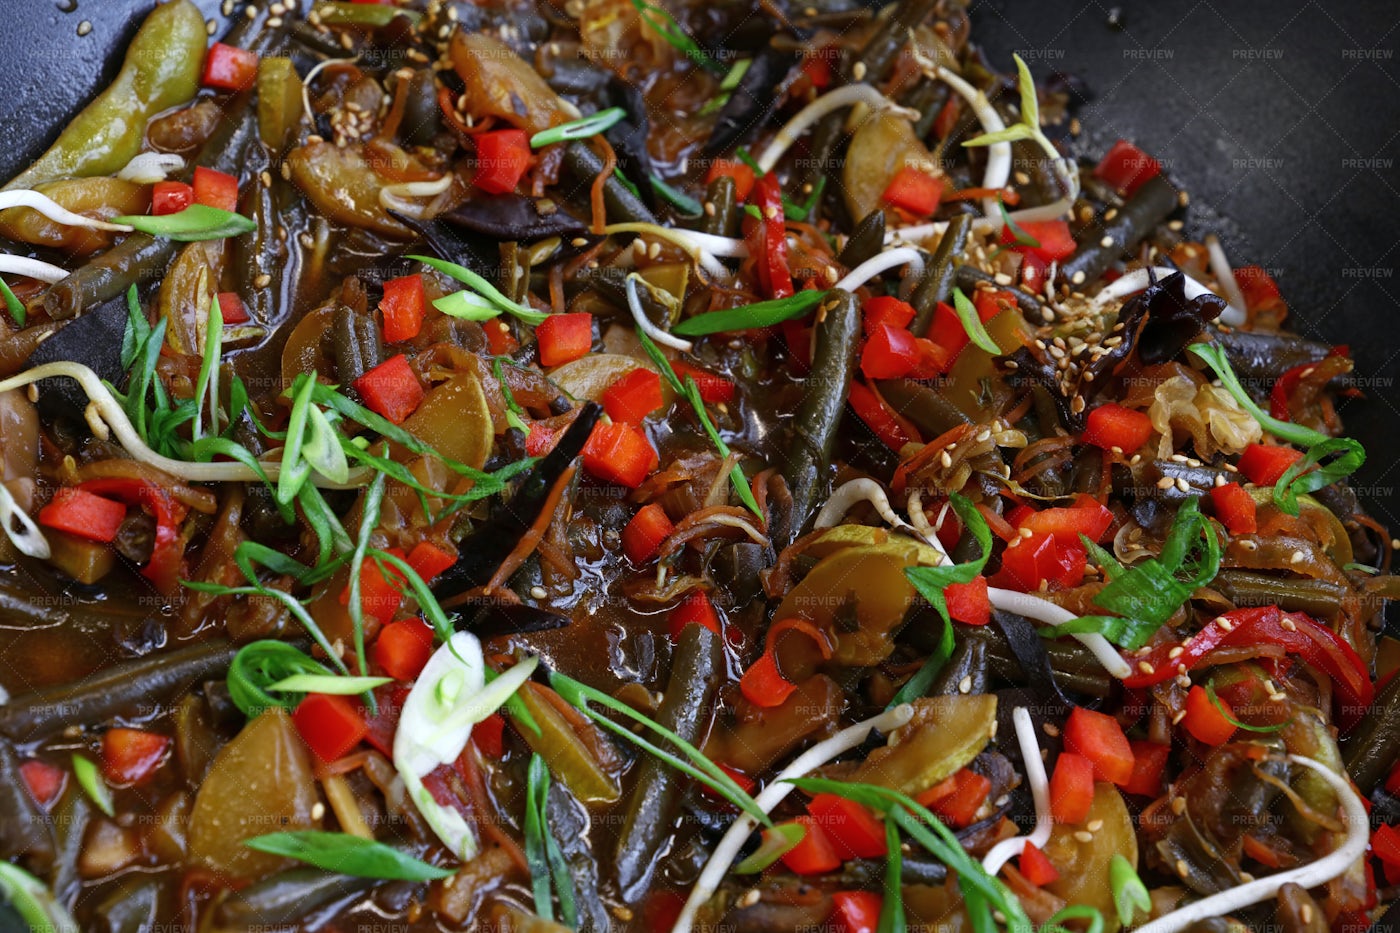 Asian Stir Fried Vegetables In Wok Pan: Stock Photos